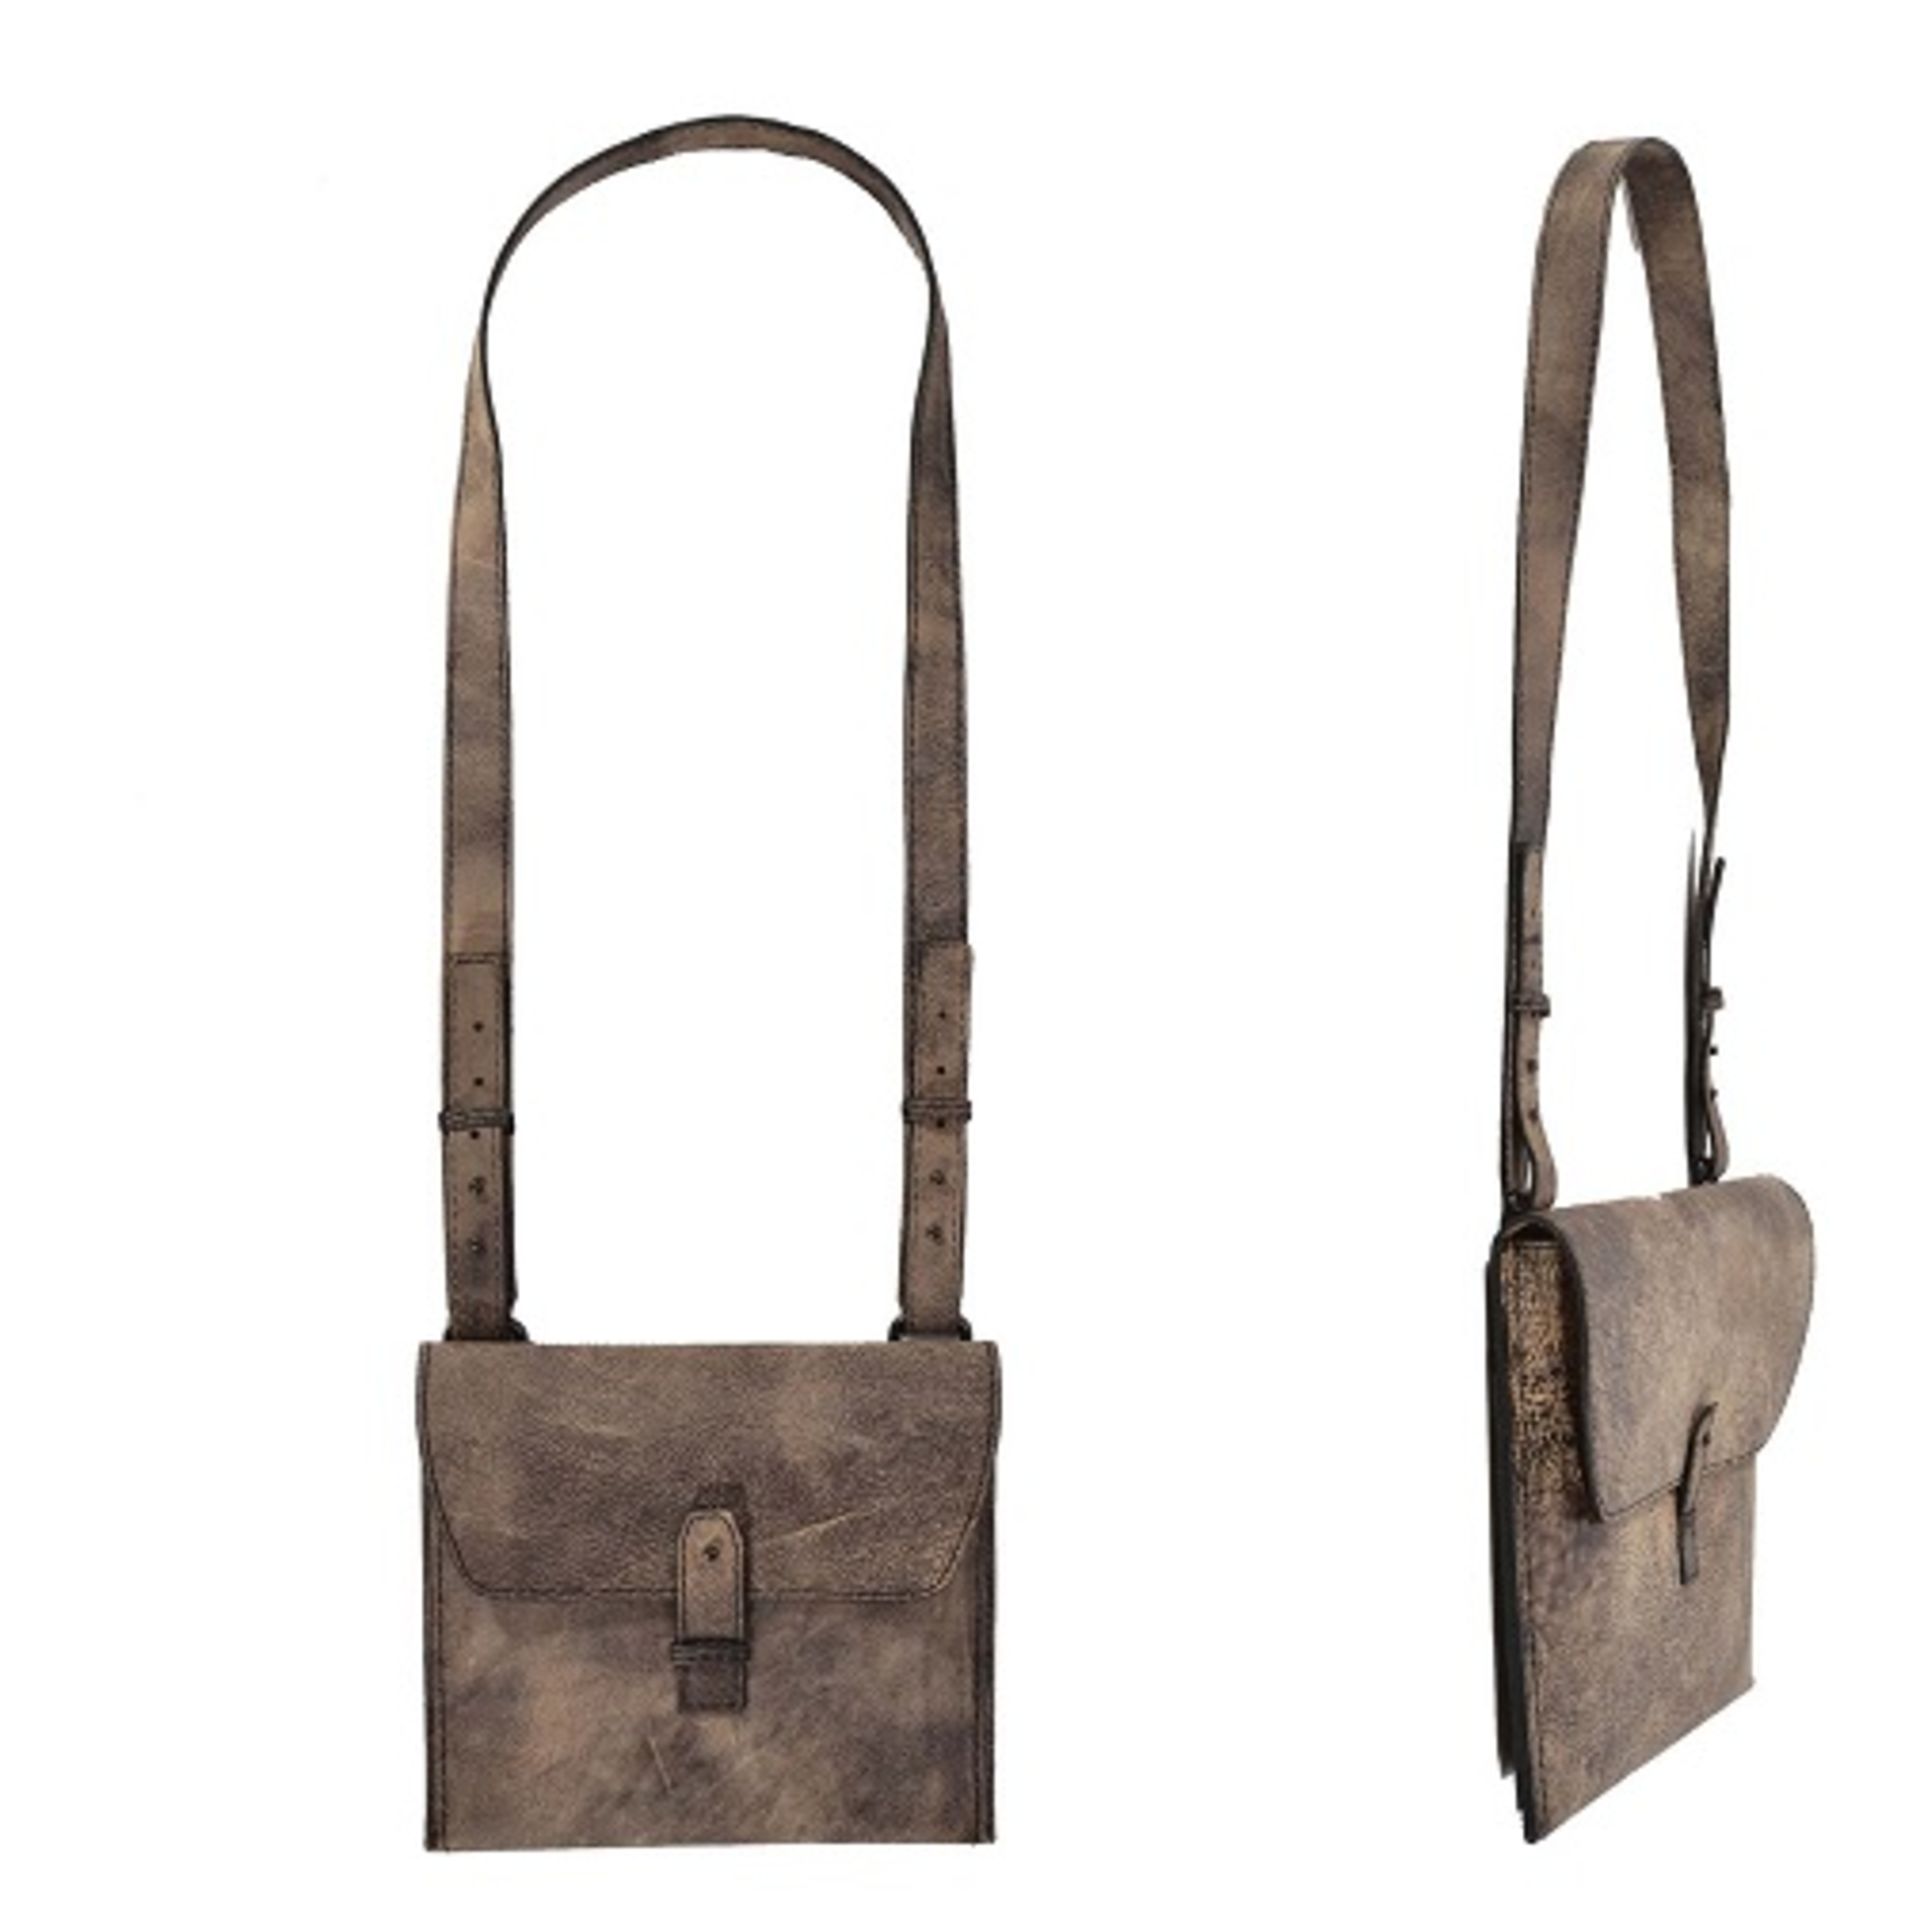 Berlin Business Bag Medium - Destroyed Raw Leather 33 X 5 X 26cm